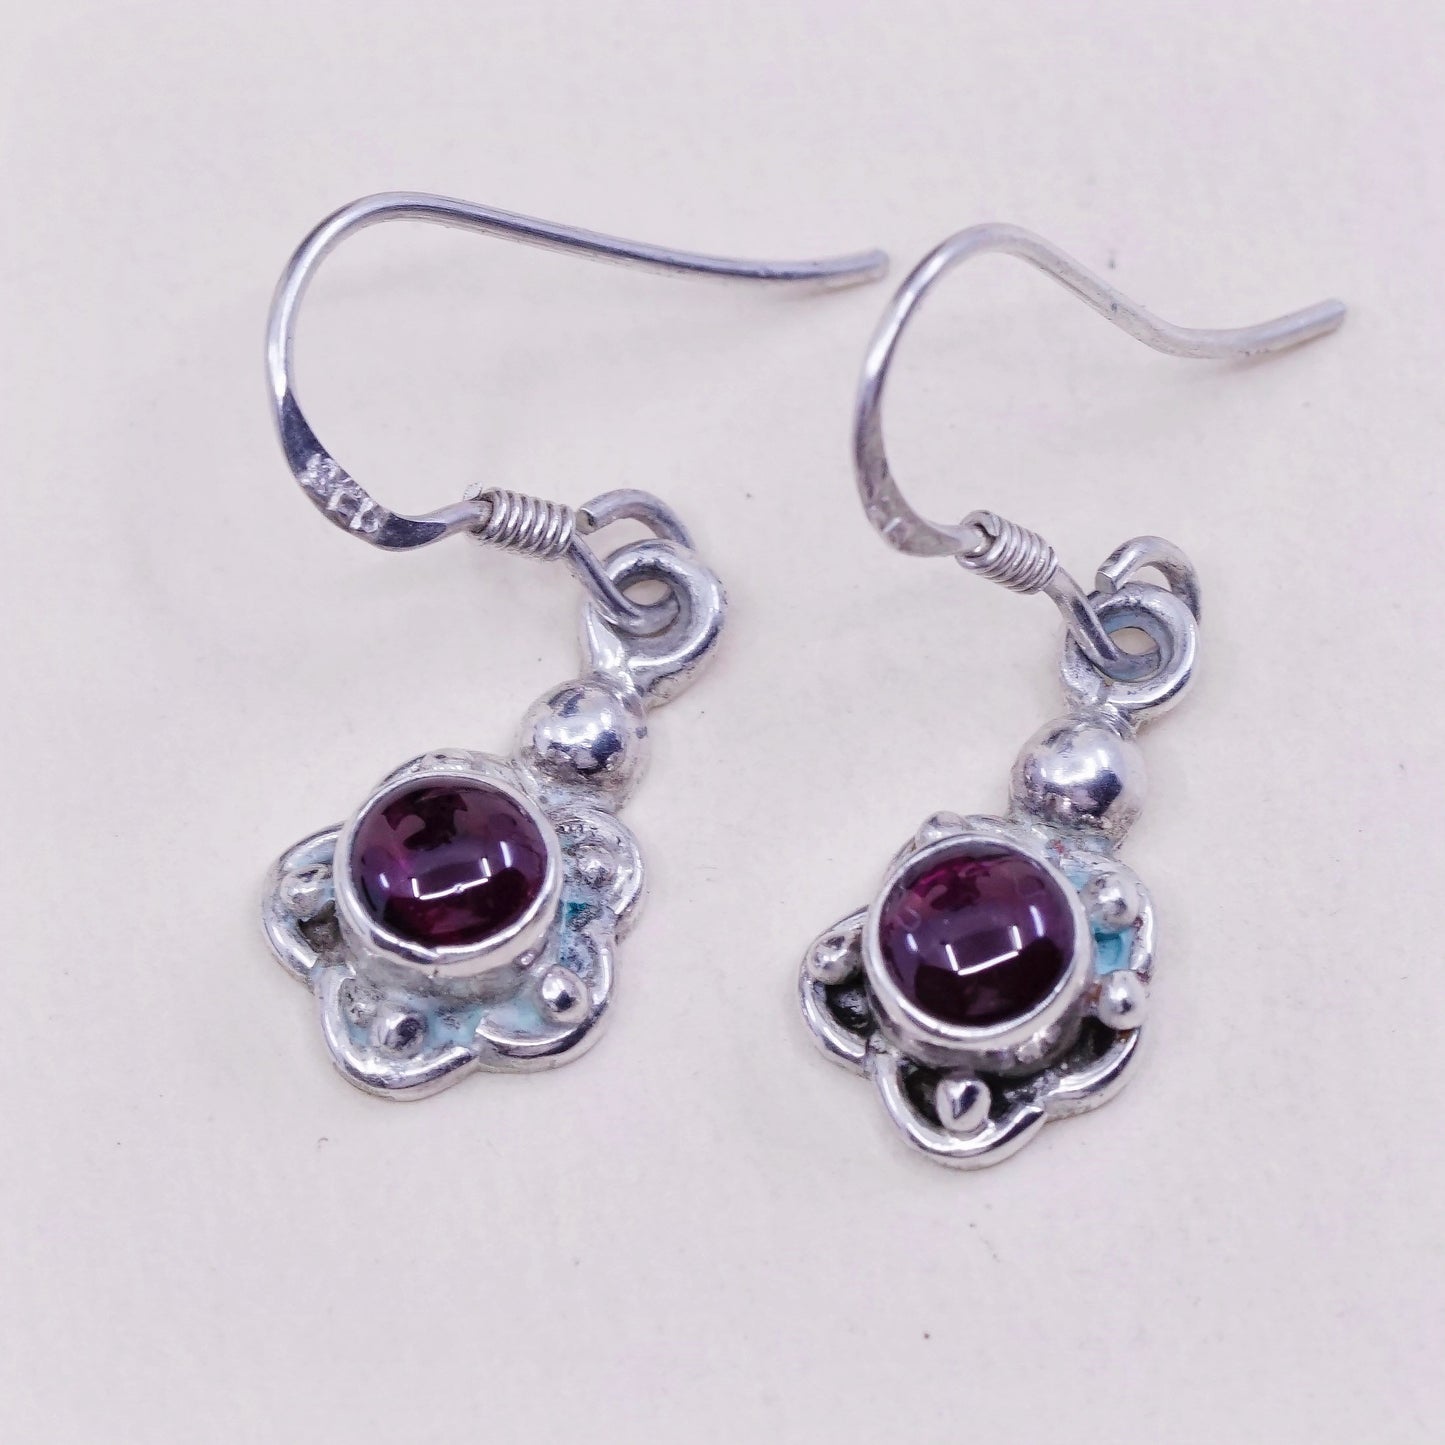 Vintage Sterling silver handmade earrings, 925 flower dangles with garnet beads